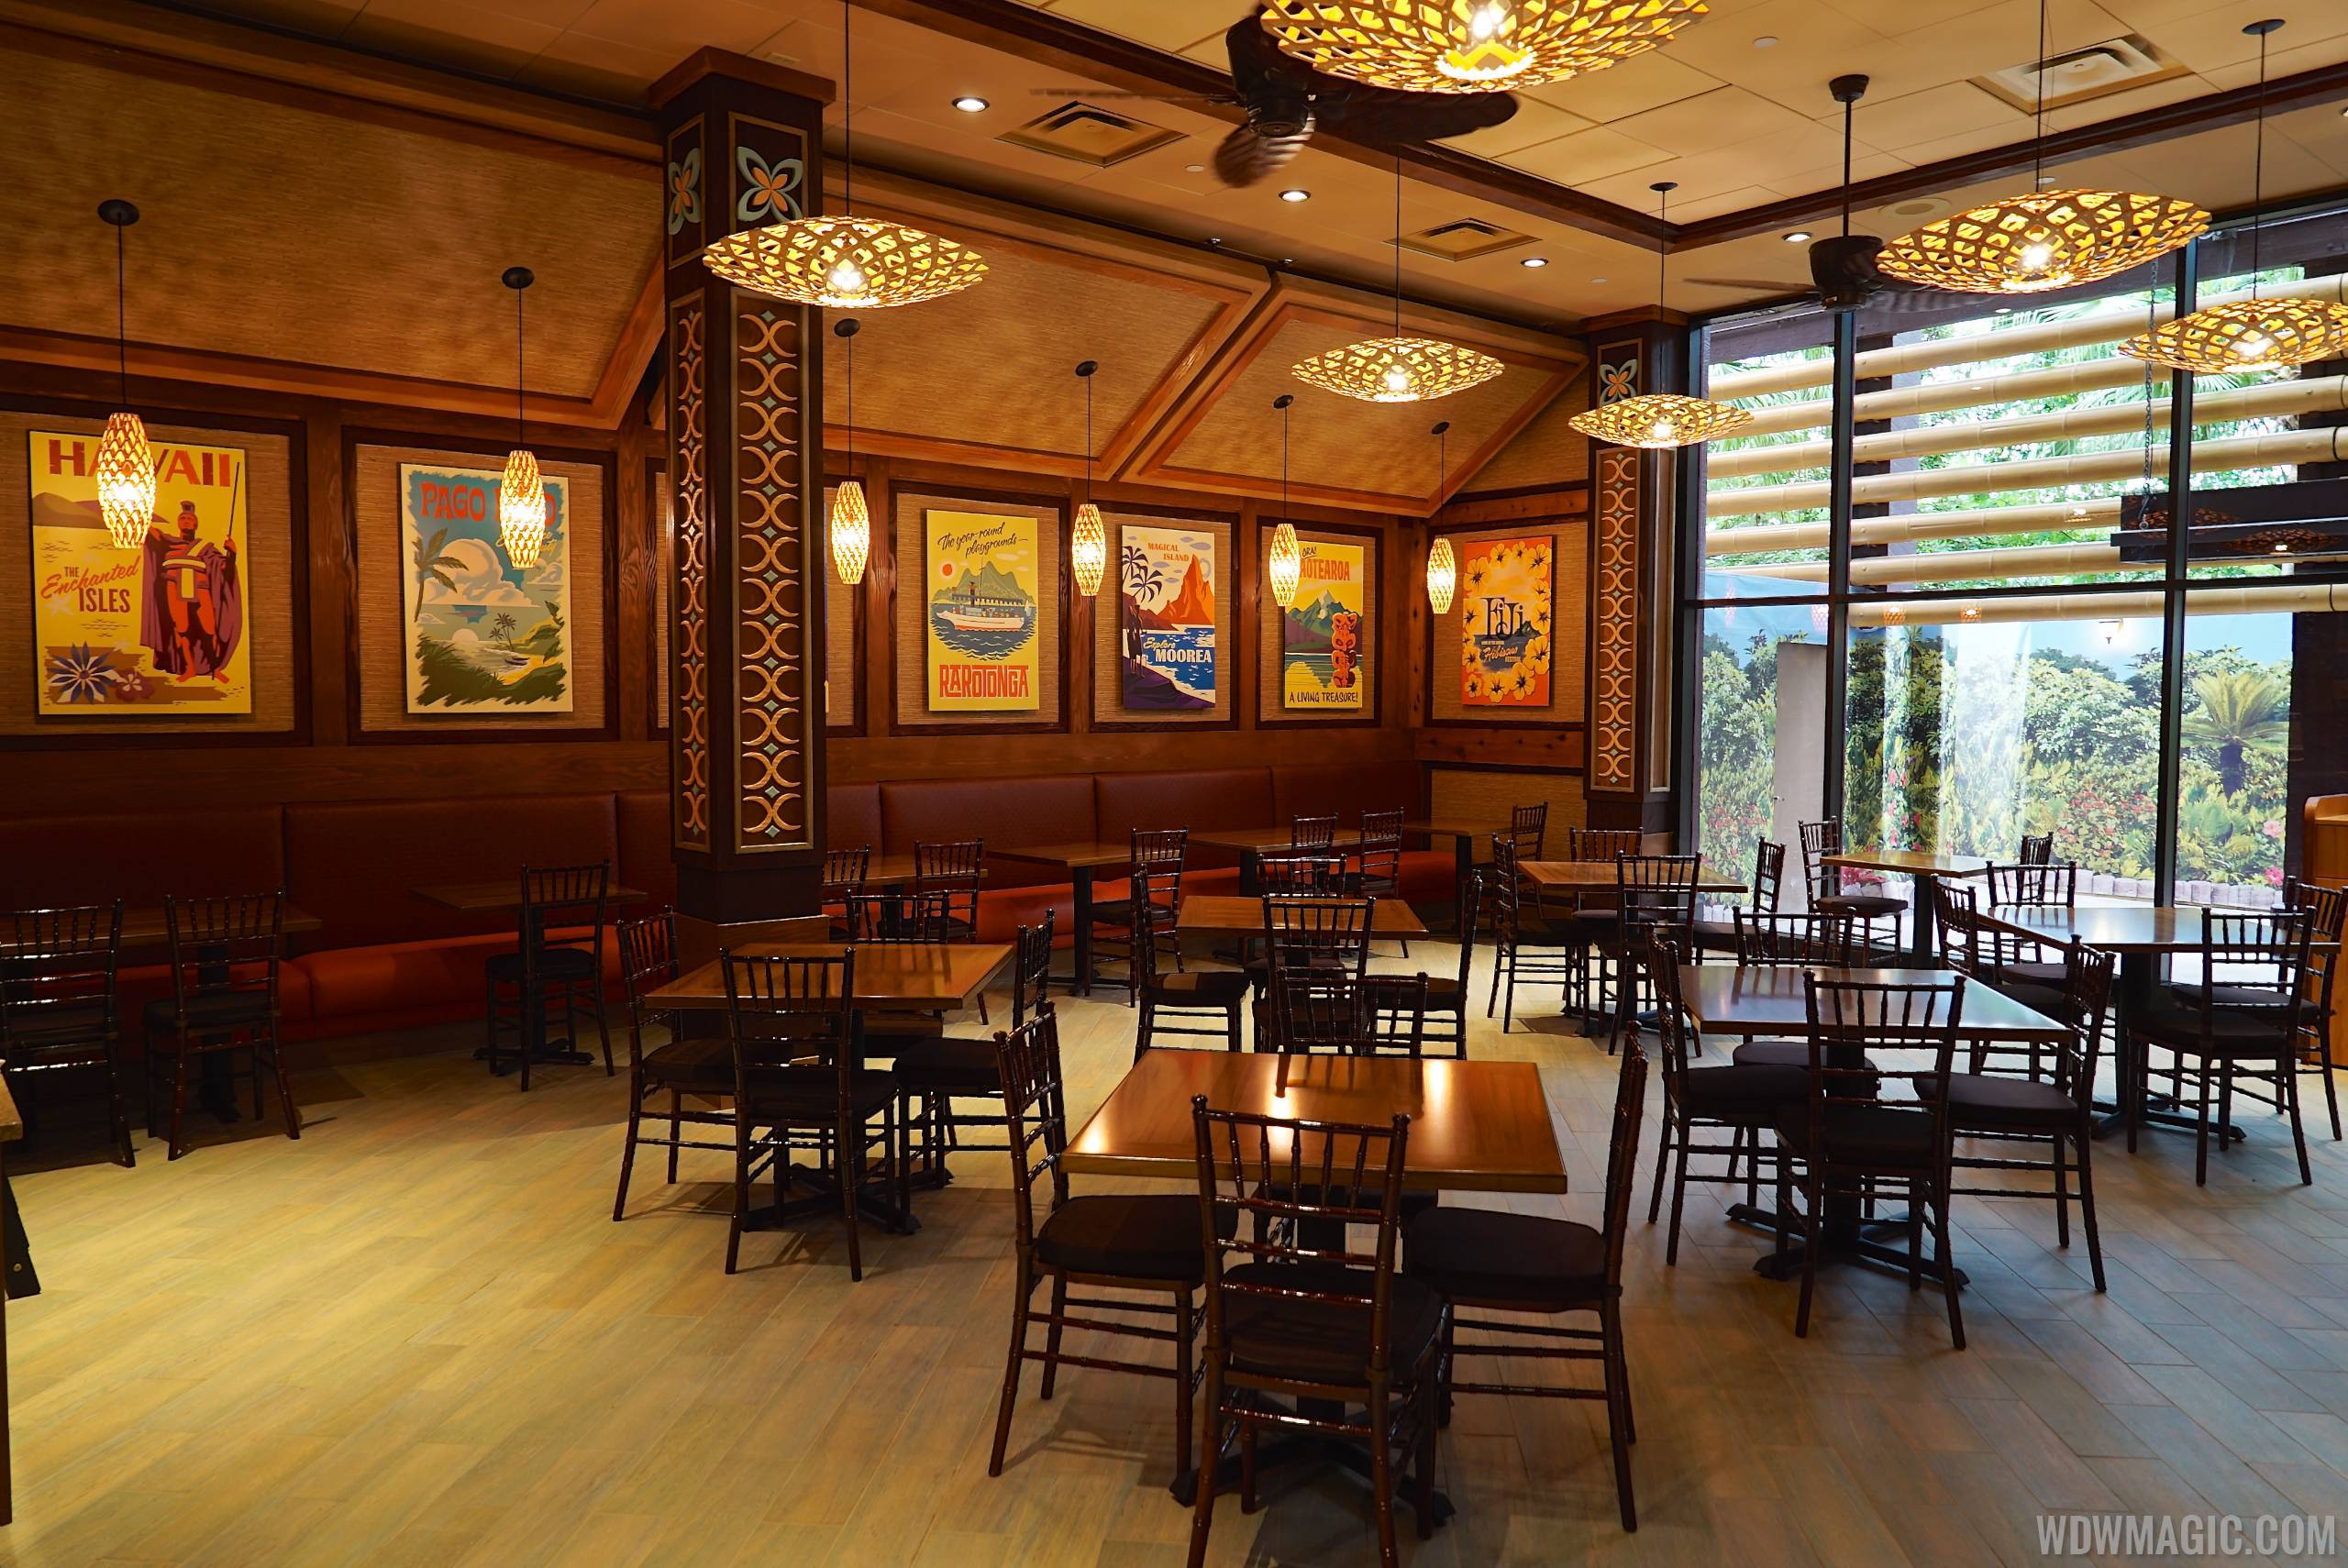 Captain Cook's at Disney's Polynesian Resort closing for major refurbishment in late March